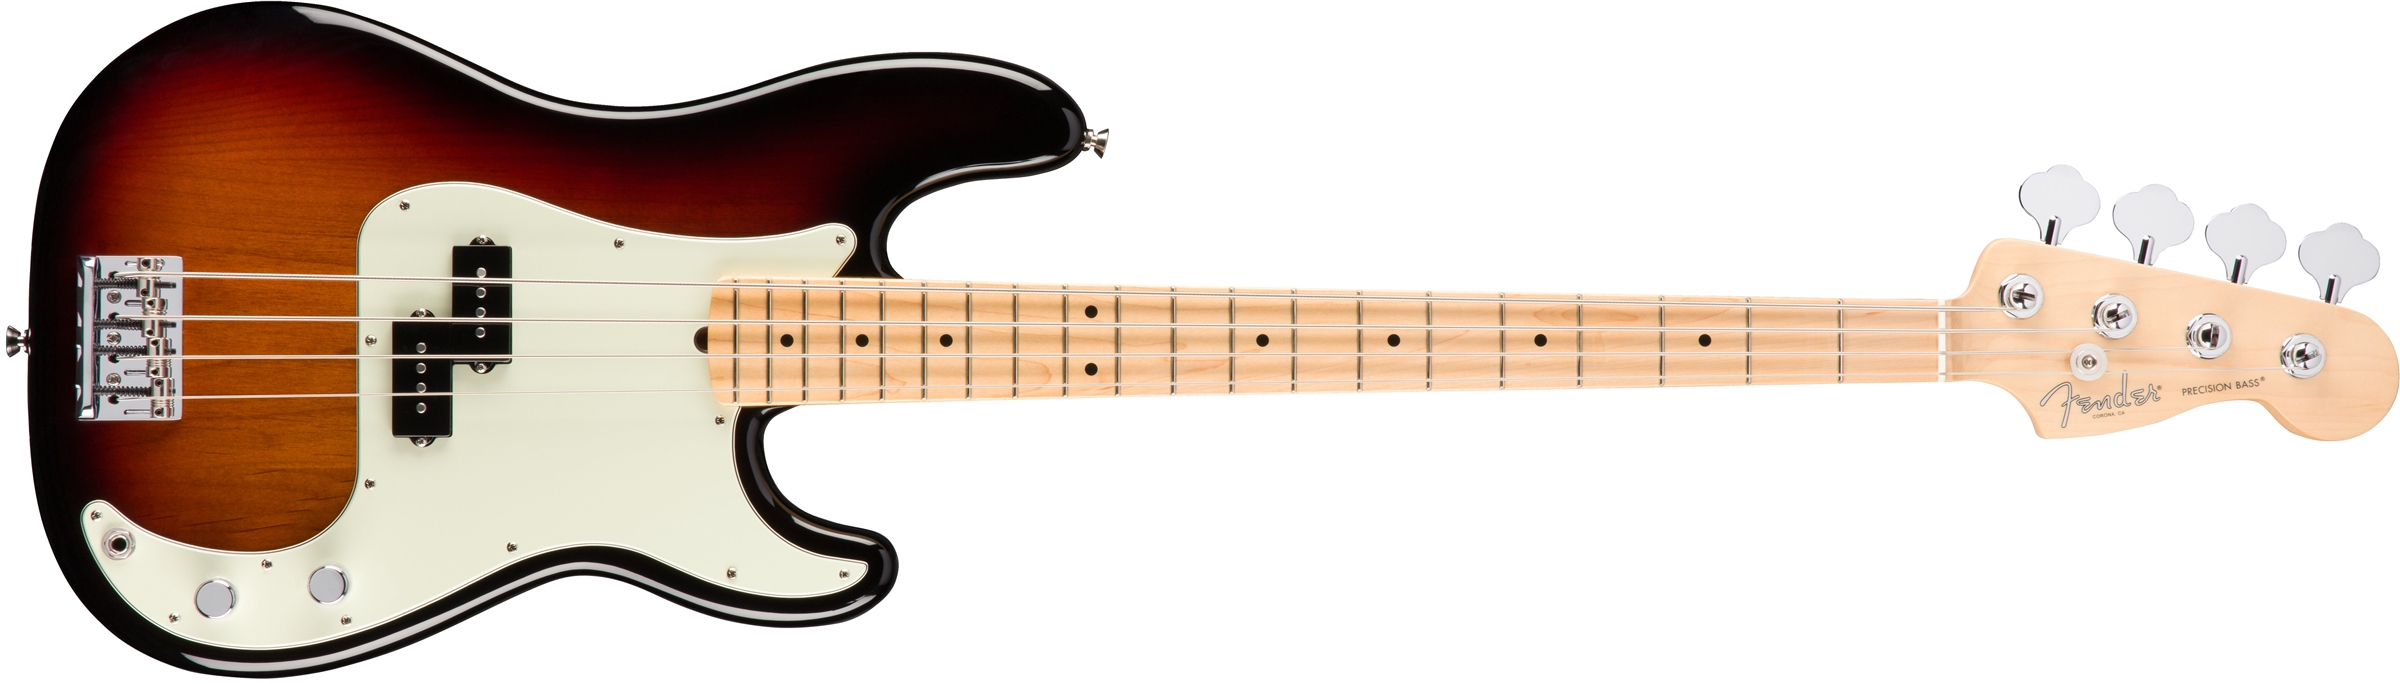 Fender Precision Bass American Professional 2017 Usa Mn - 3-color Sunburst - Solid body elektrische bas - Variation 1